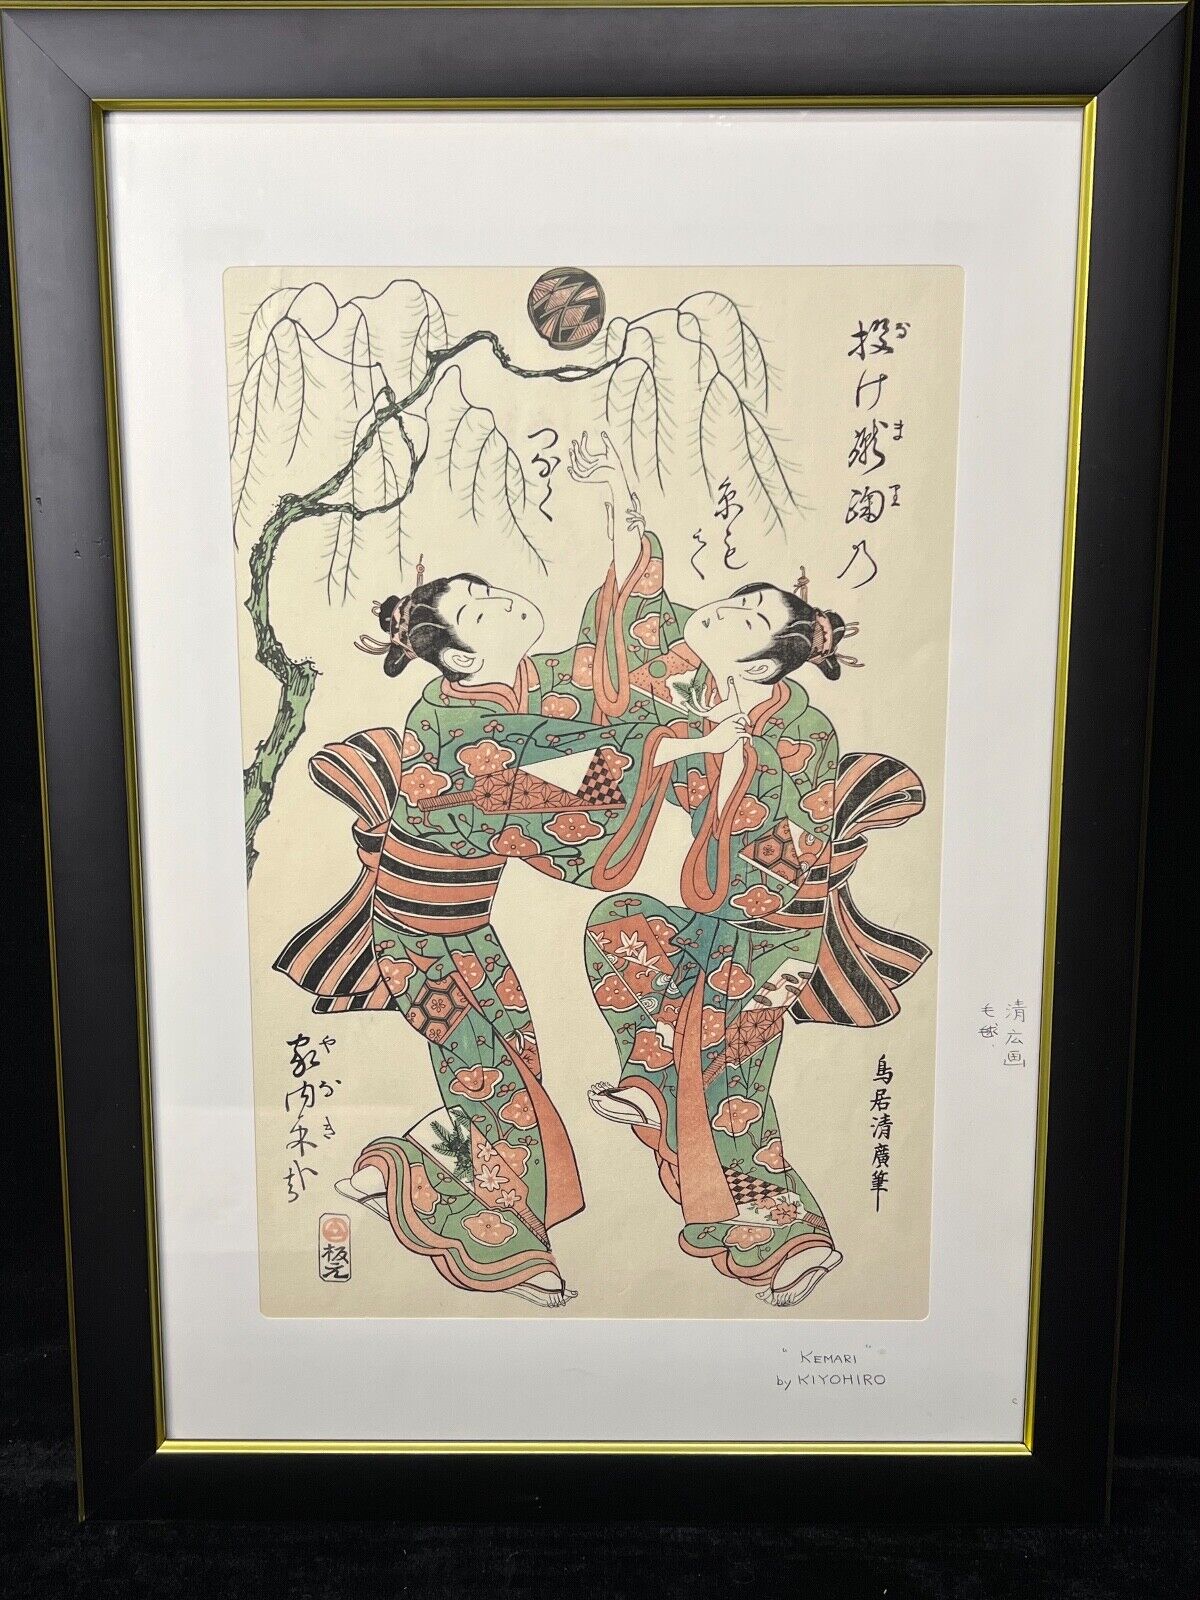 Japanese Woodblock Print Reproduction: By Kiyohiro Bijinga "Kemari" Print